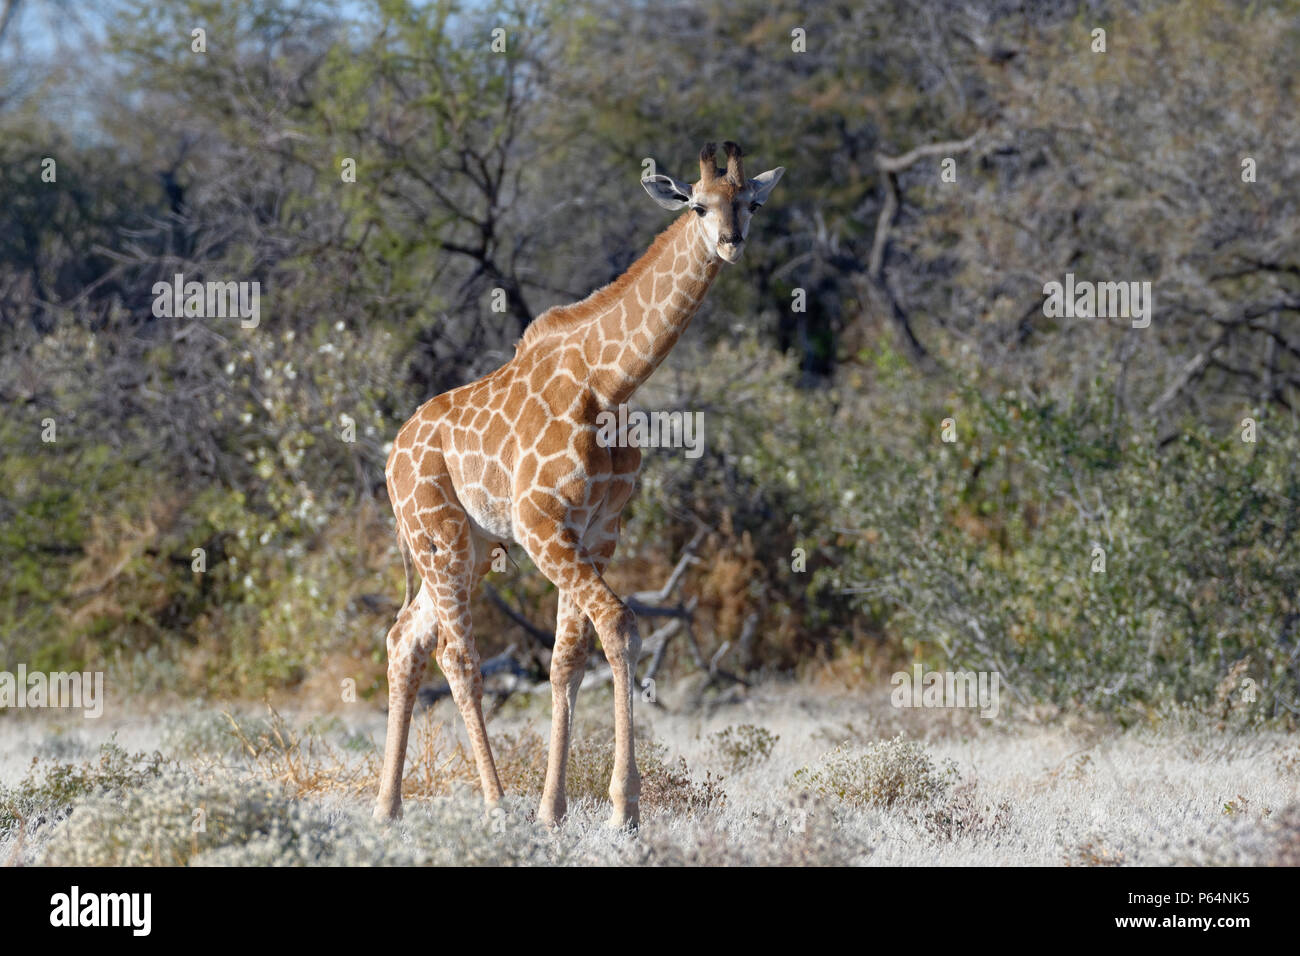 Namibian giraffe or Angolan giraffe (Giraffa camelopardalis angolensis), young animal walking, curious, Etosha National Park, Namibia, Africa Stock Photo